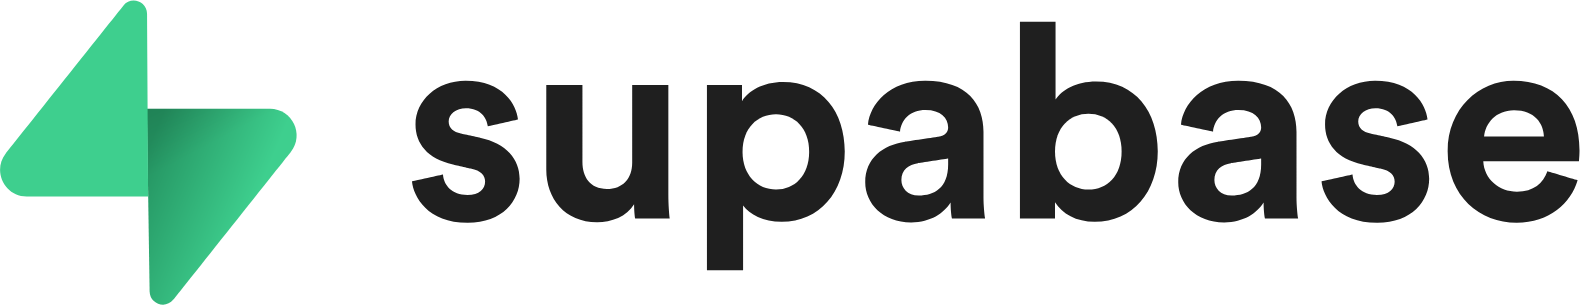 Supabase logo large (transparent PNG)